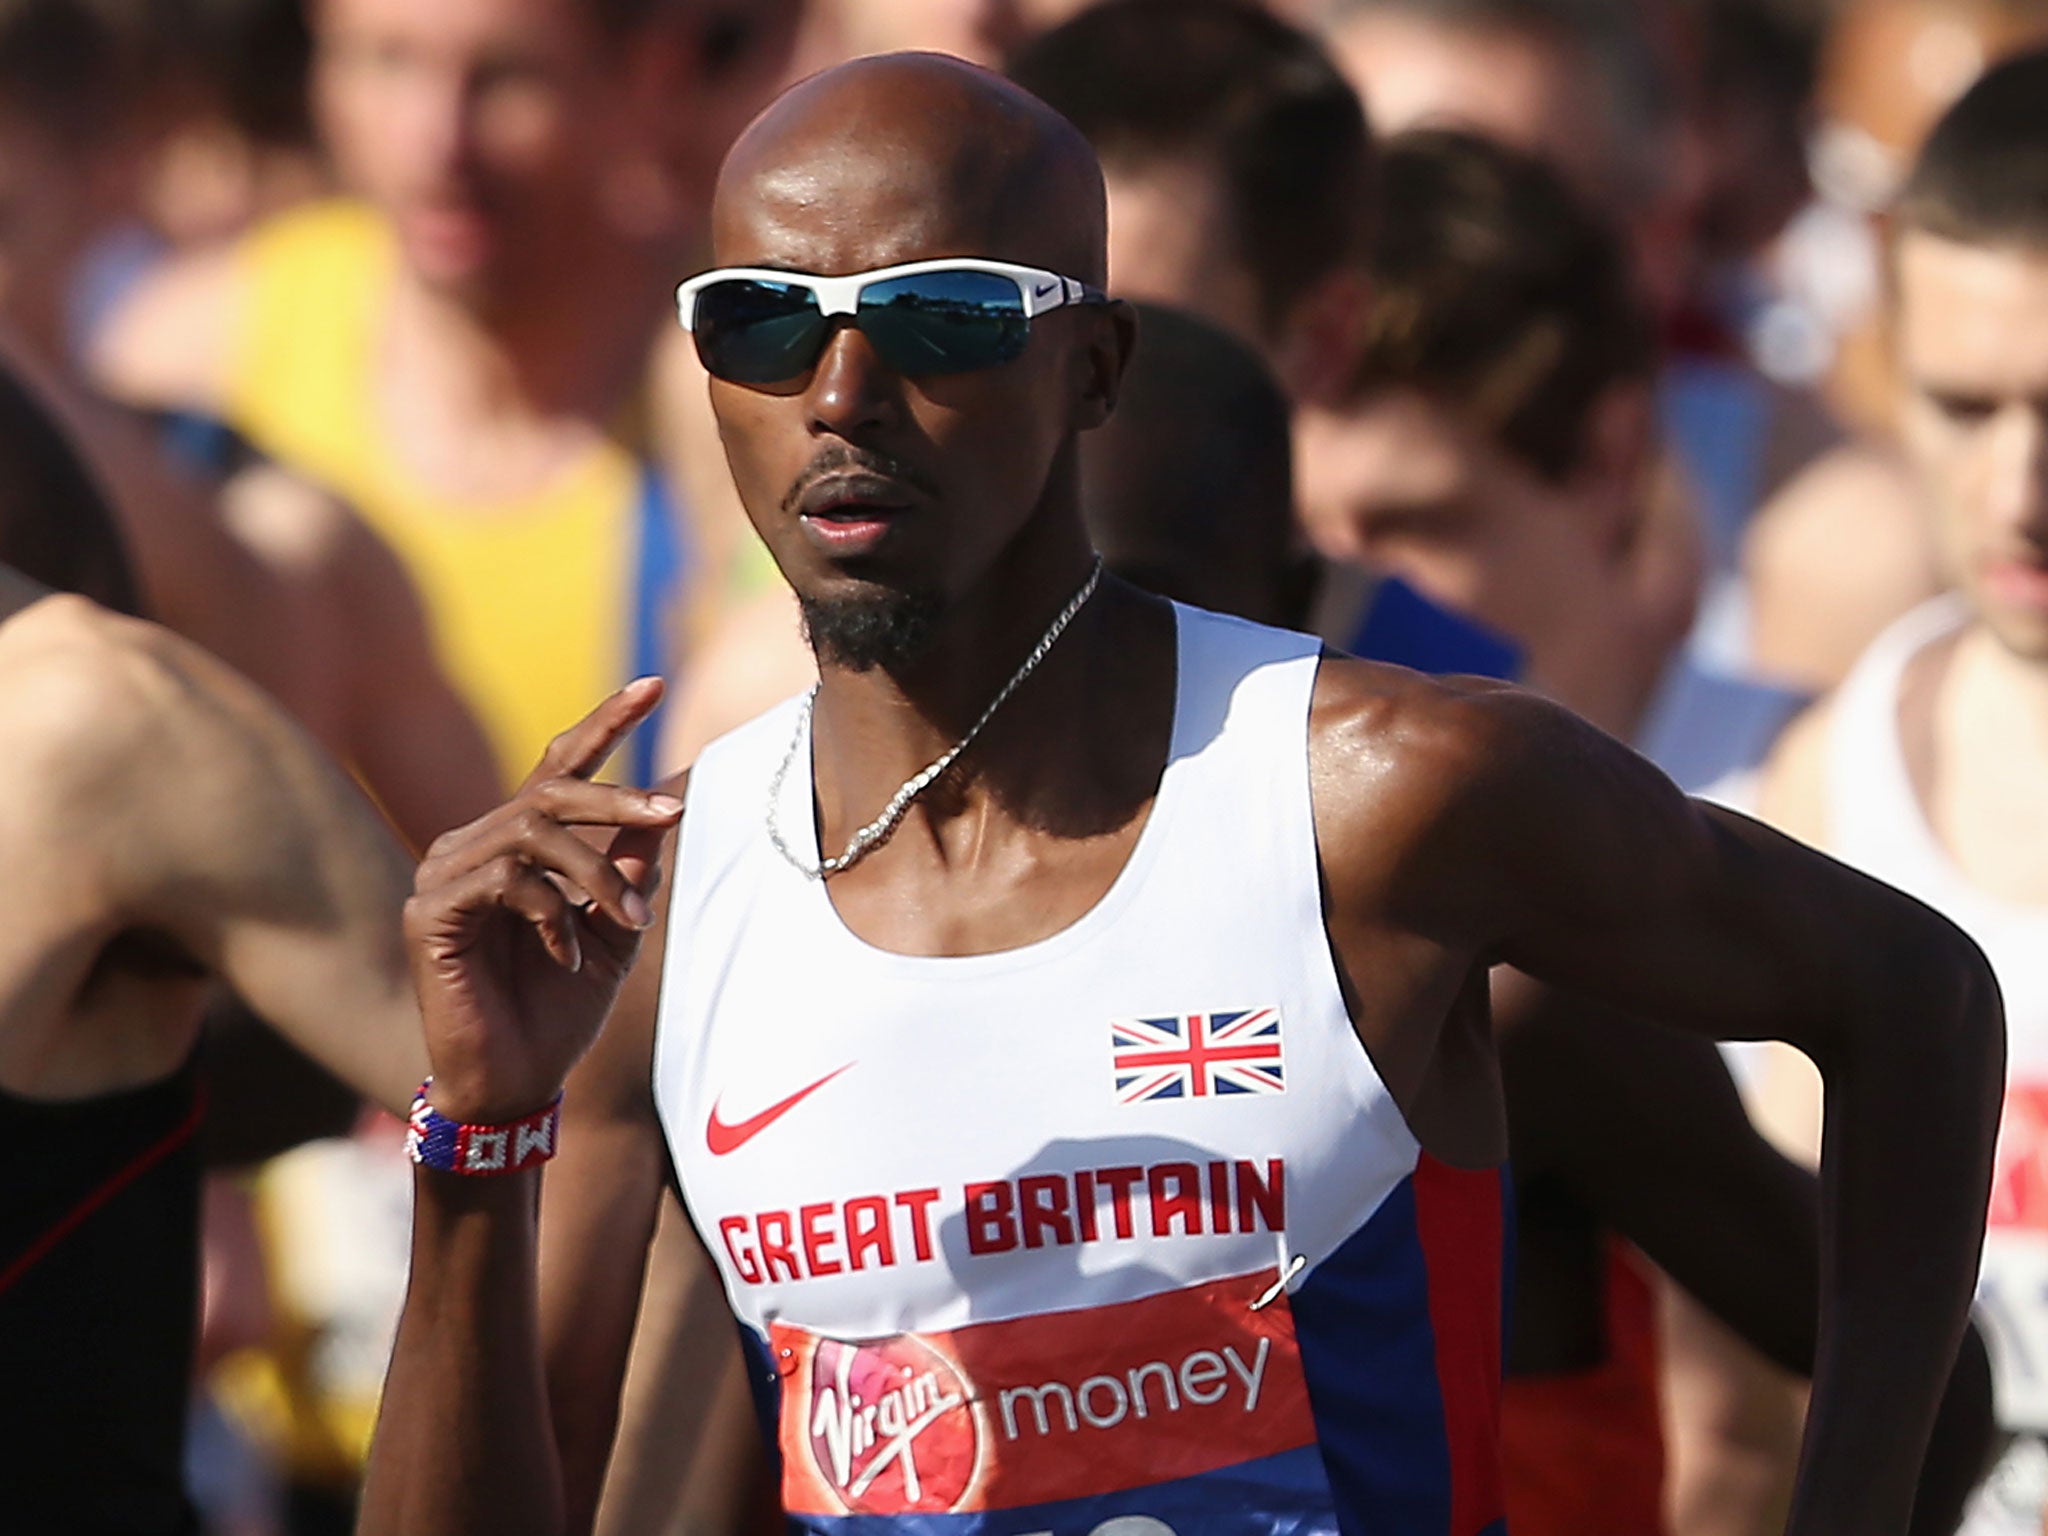 Mo Farah takes part in the 2014 London Marathon